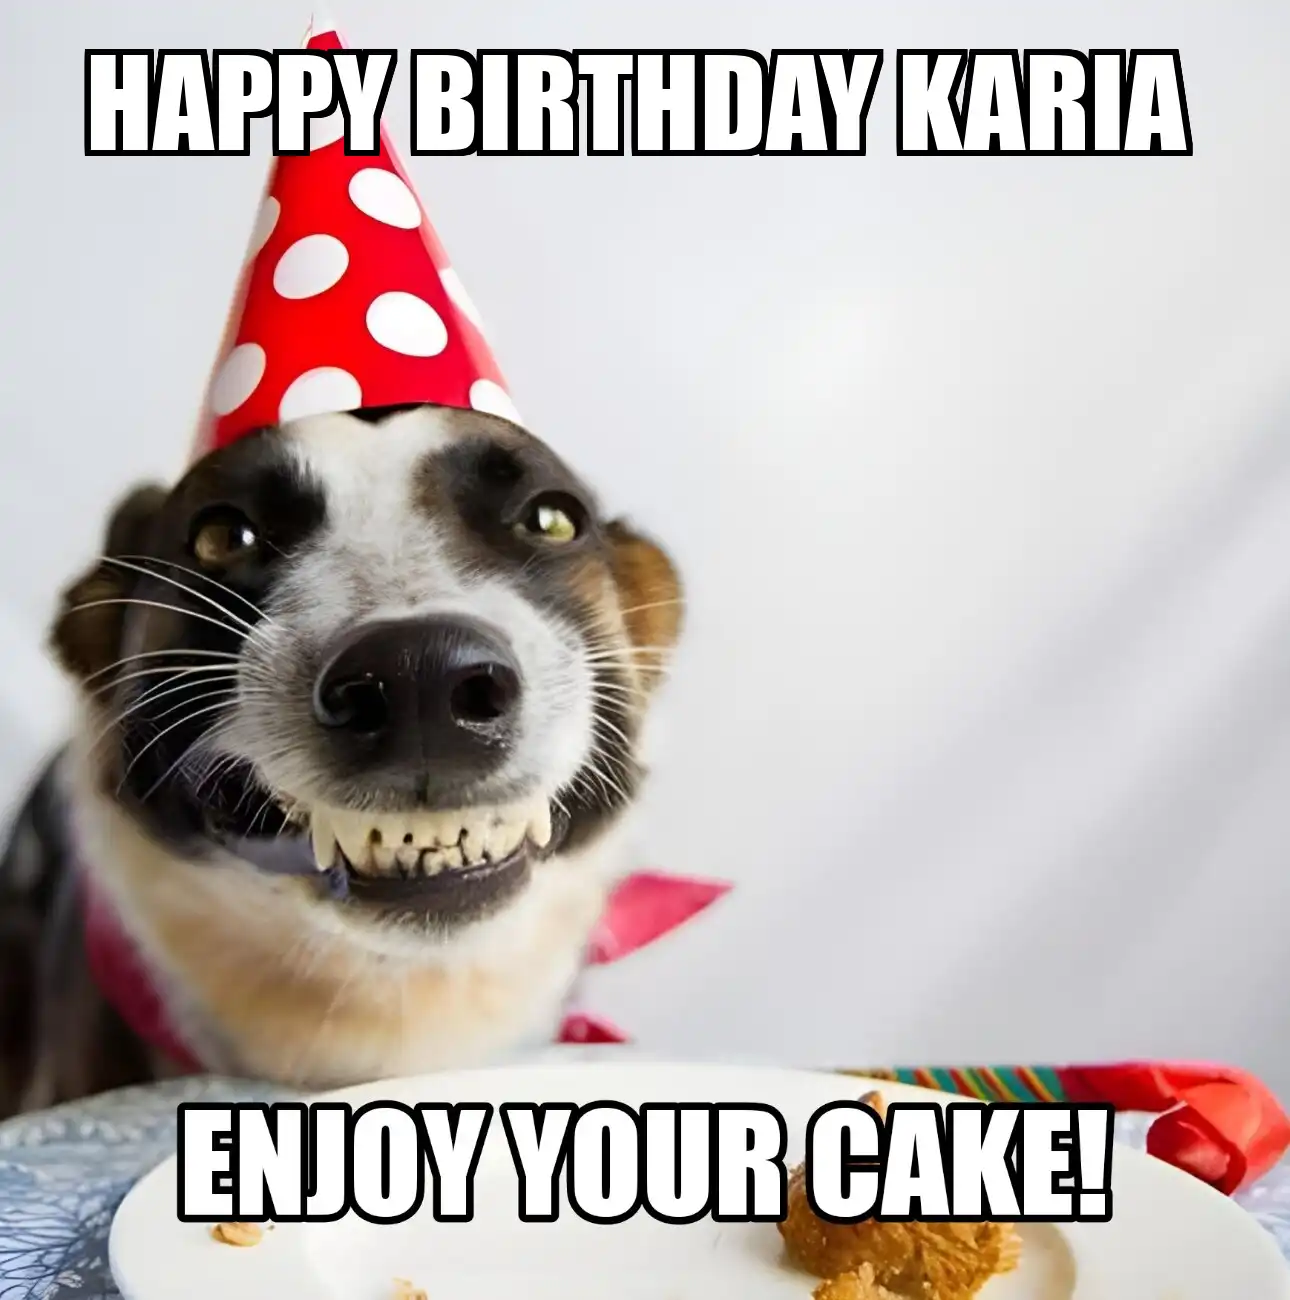 Happy Birthday Karia Enjoy Your Cake Dog Meme